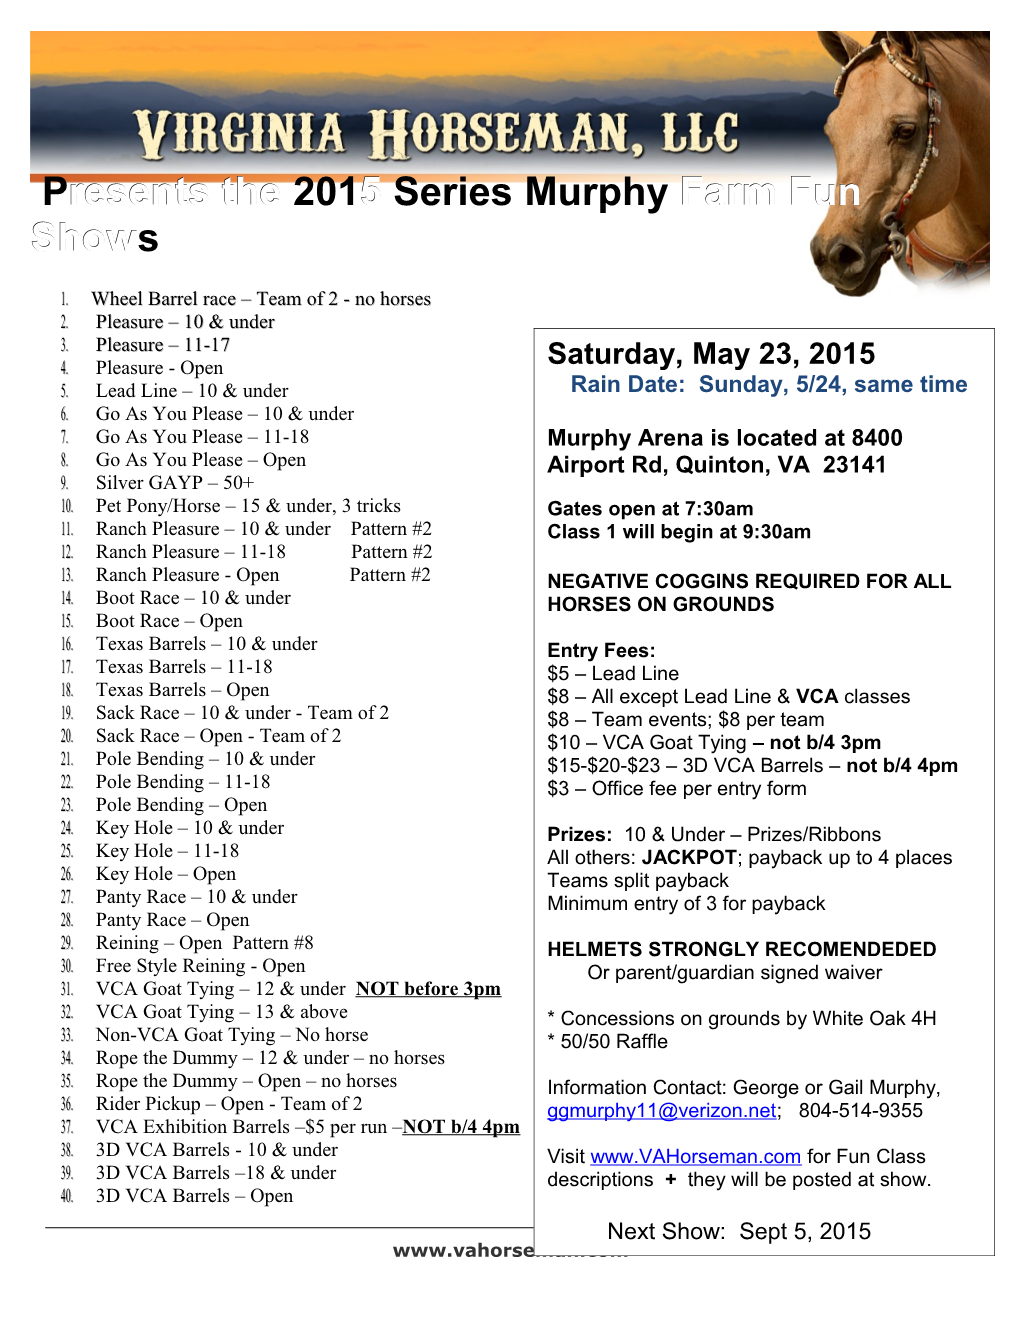 Presents the 2015 Series Murphy Farm Fun Shows